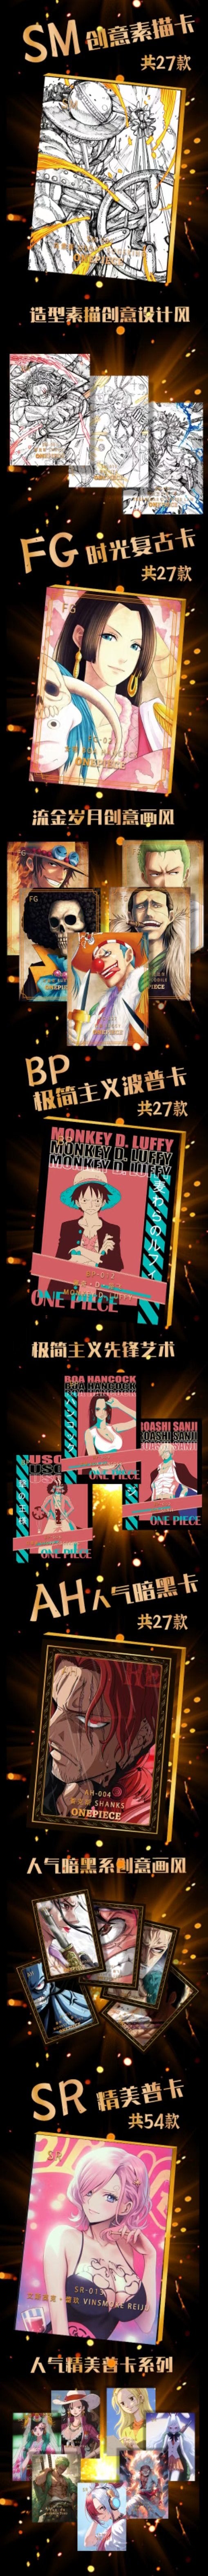 🔥 One Piece Legends Pangu Culture Goddess Story Anime 🔥